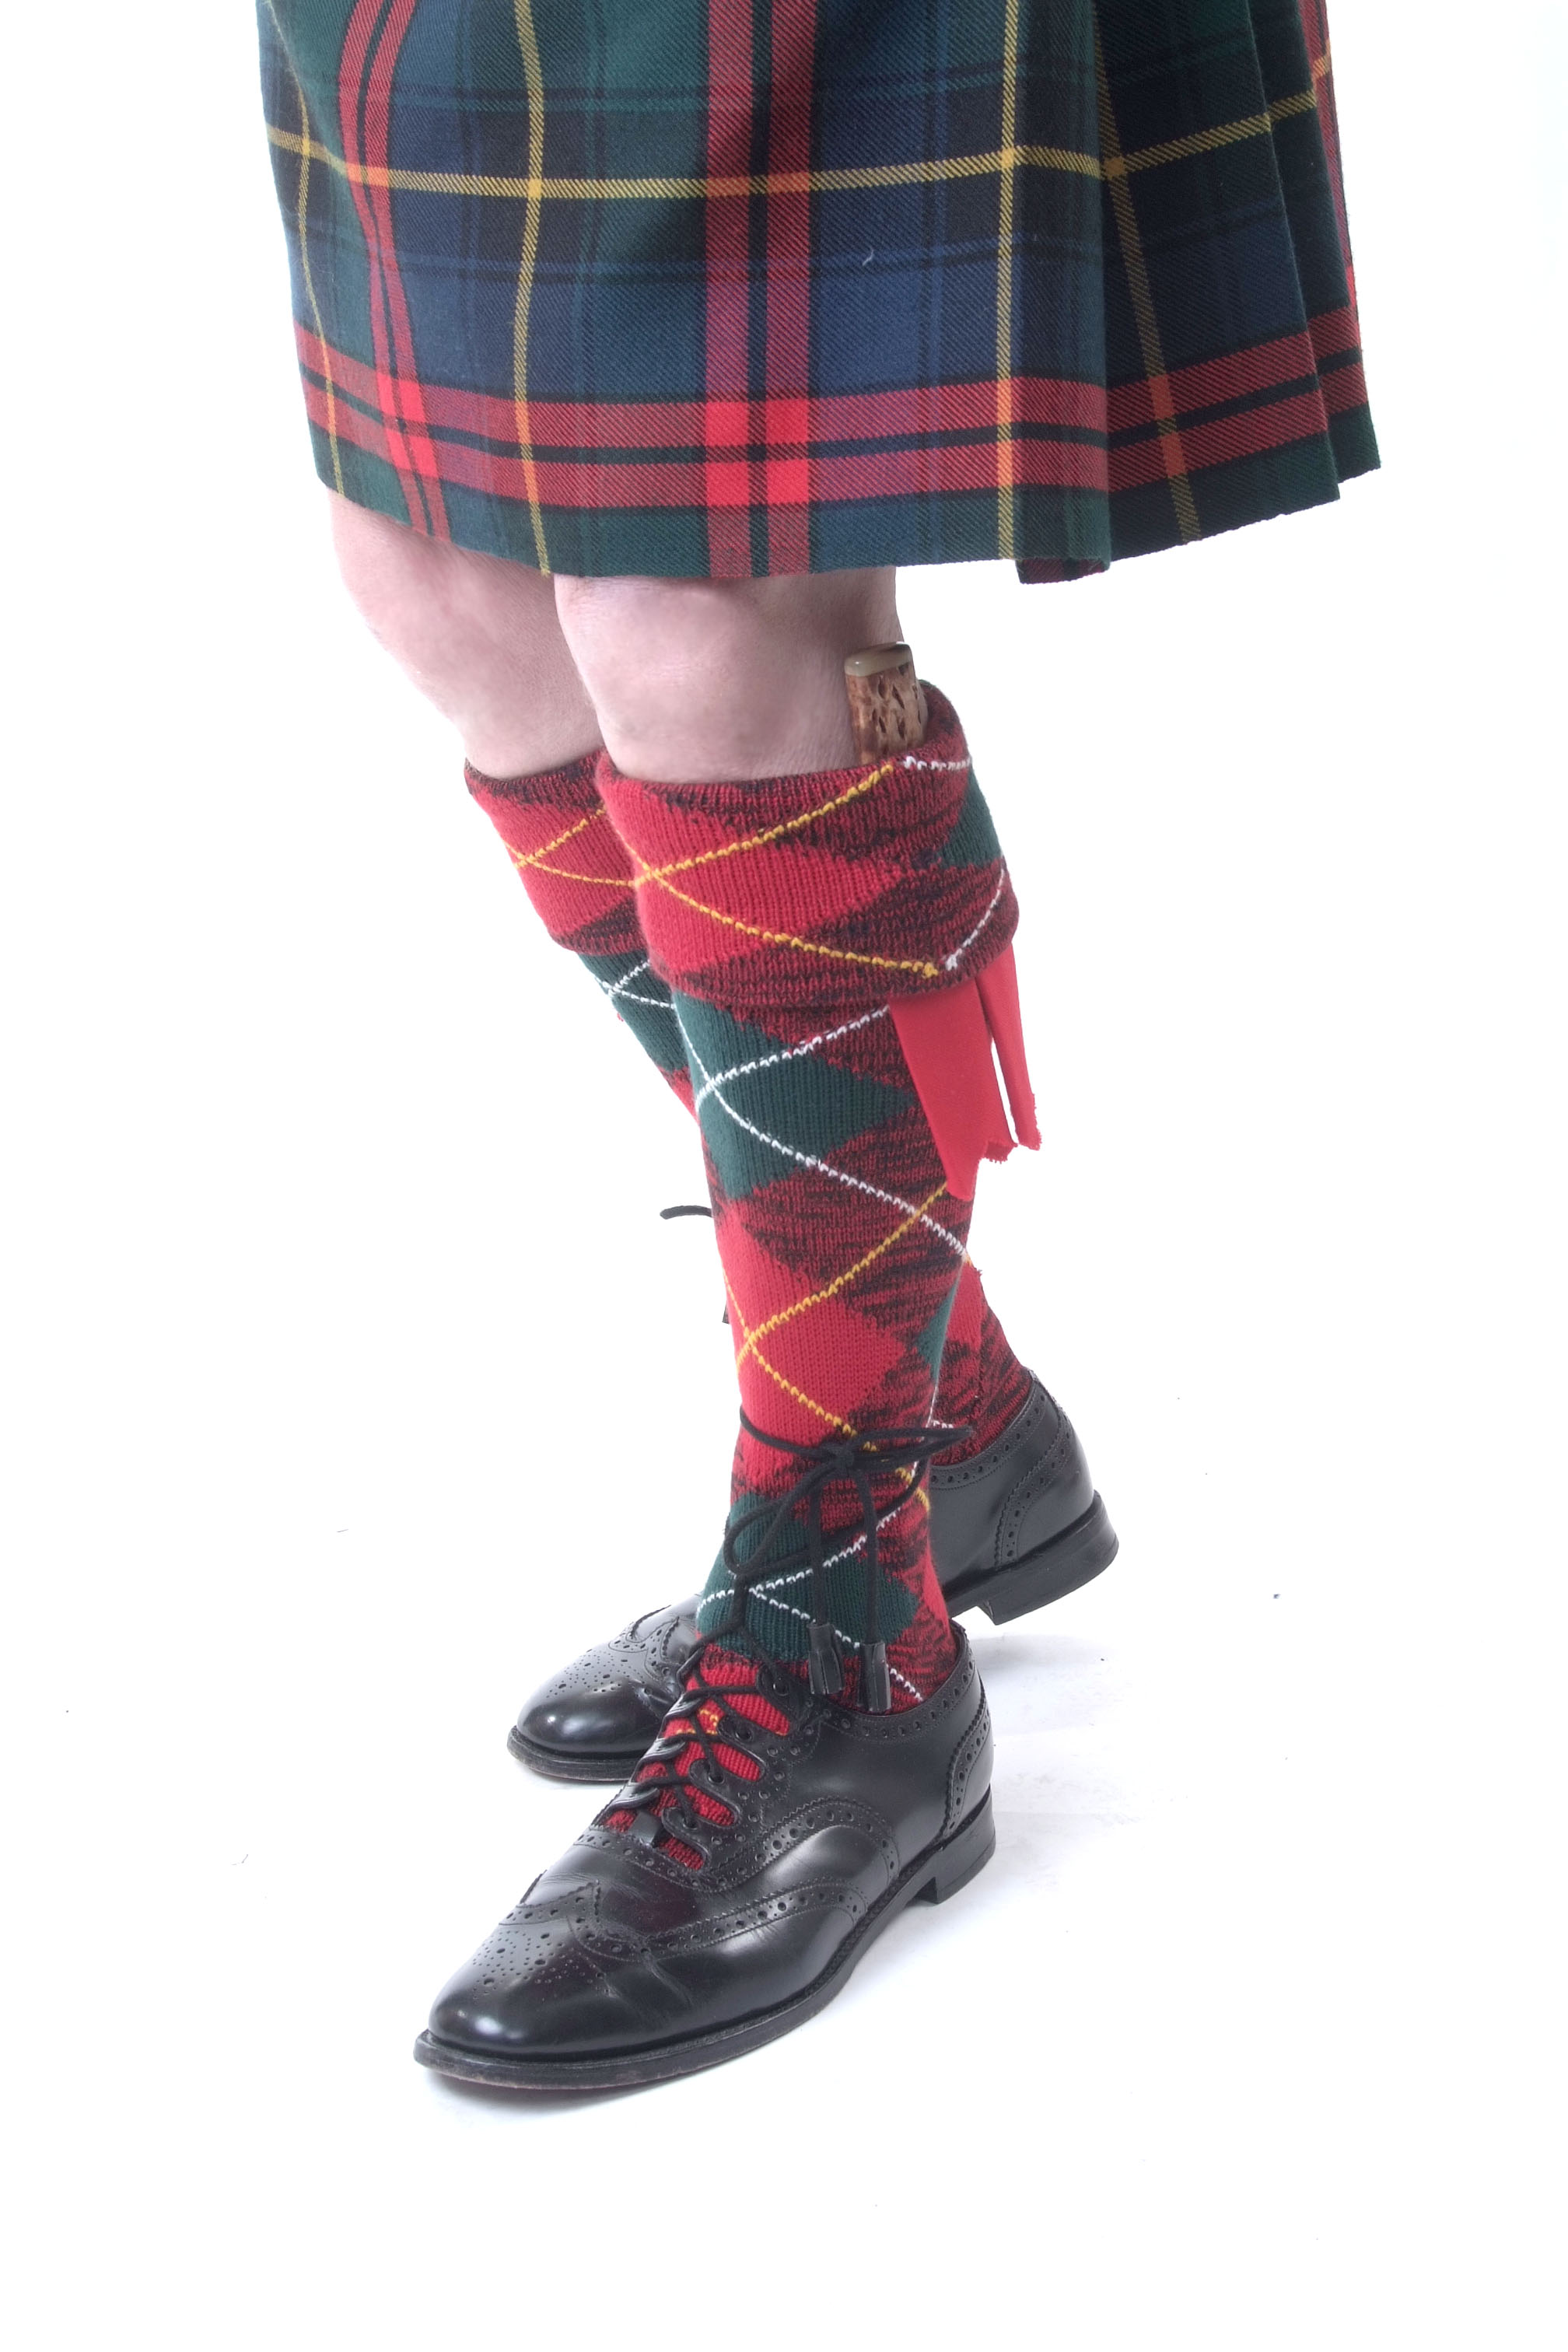 CC Scottish Kilt Sock Flashes various Tartans/Highland Kilt Hose Flashes pointed 